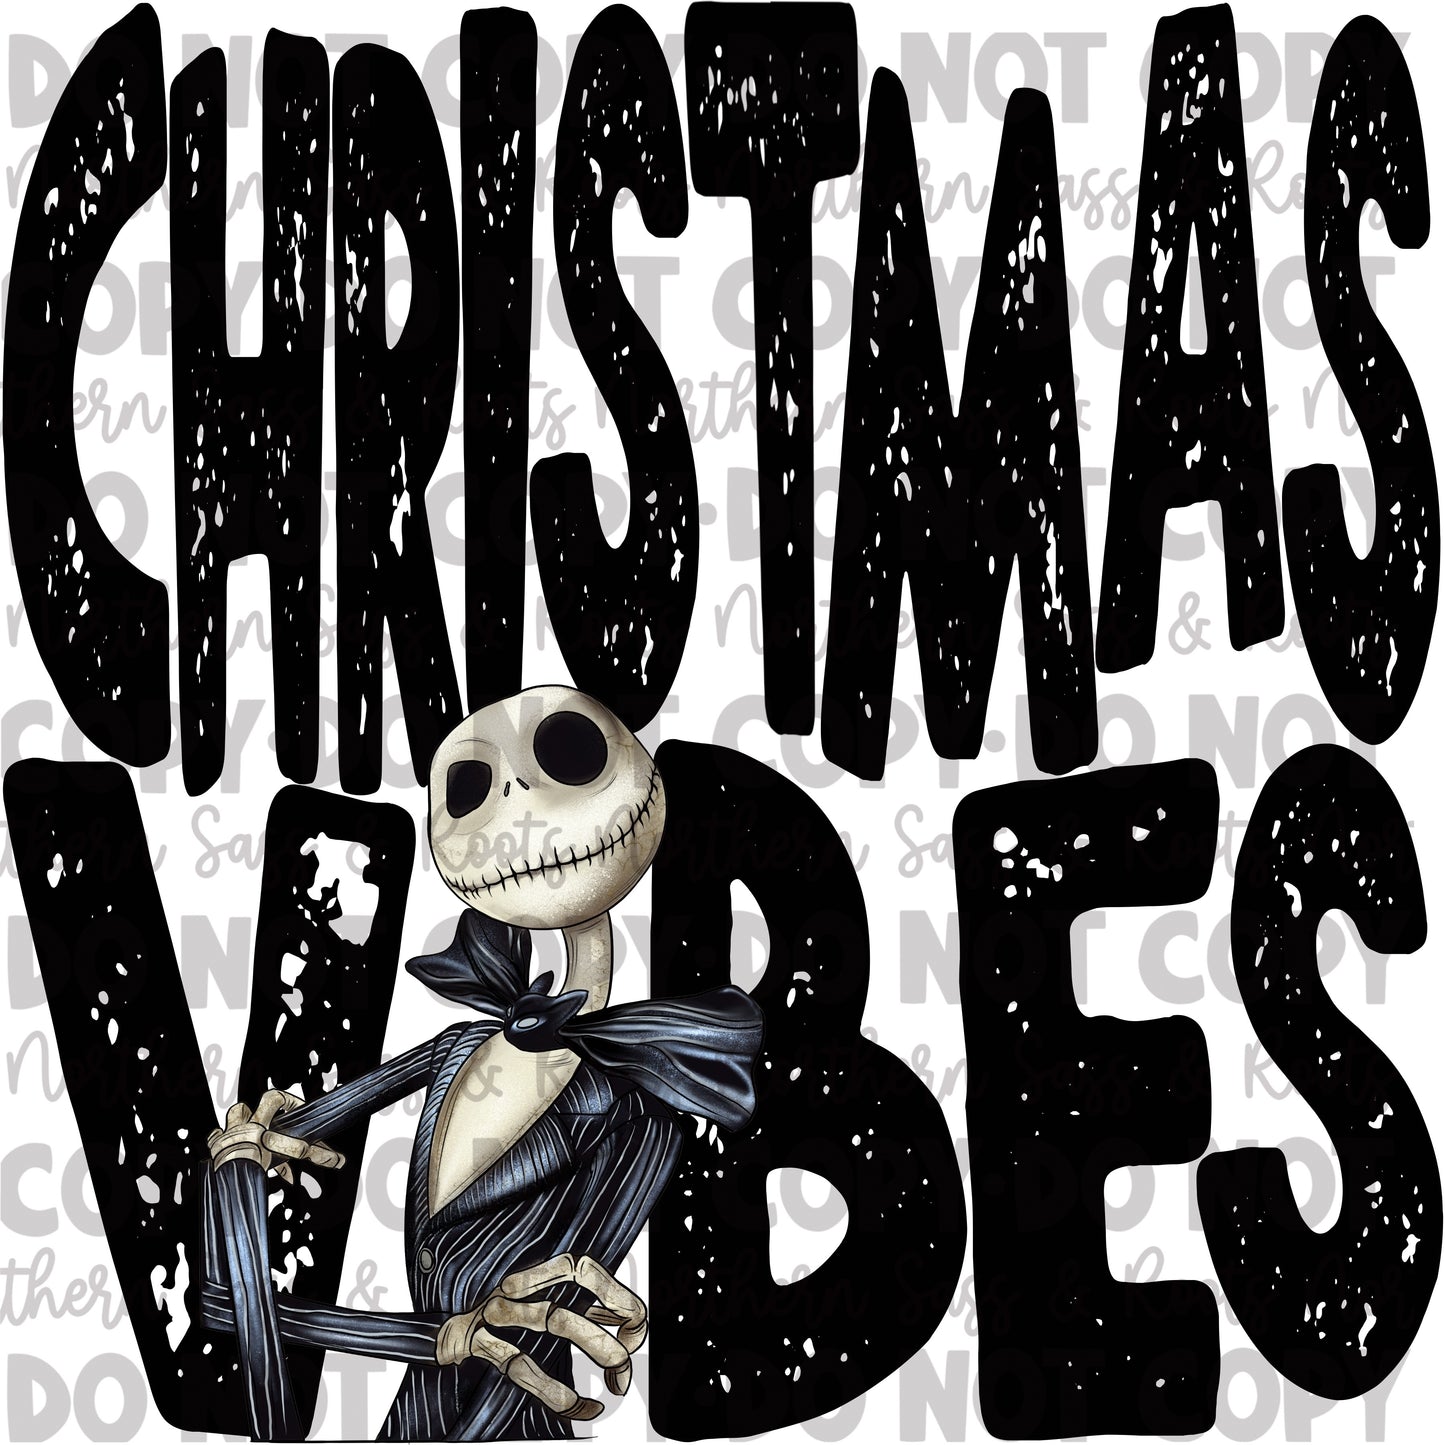 CHRISTMAS VIBES (Nightmare Tri-Color): DIGITAL DOWNLOAD